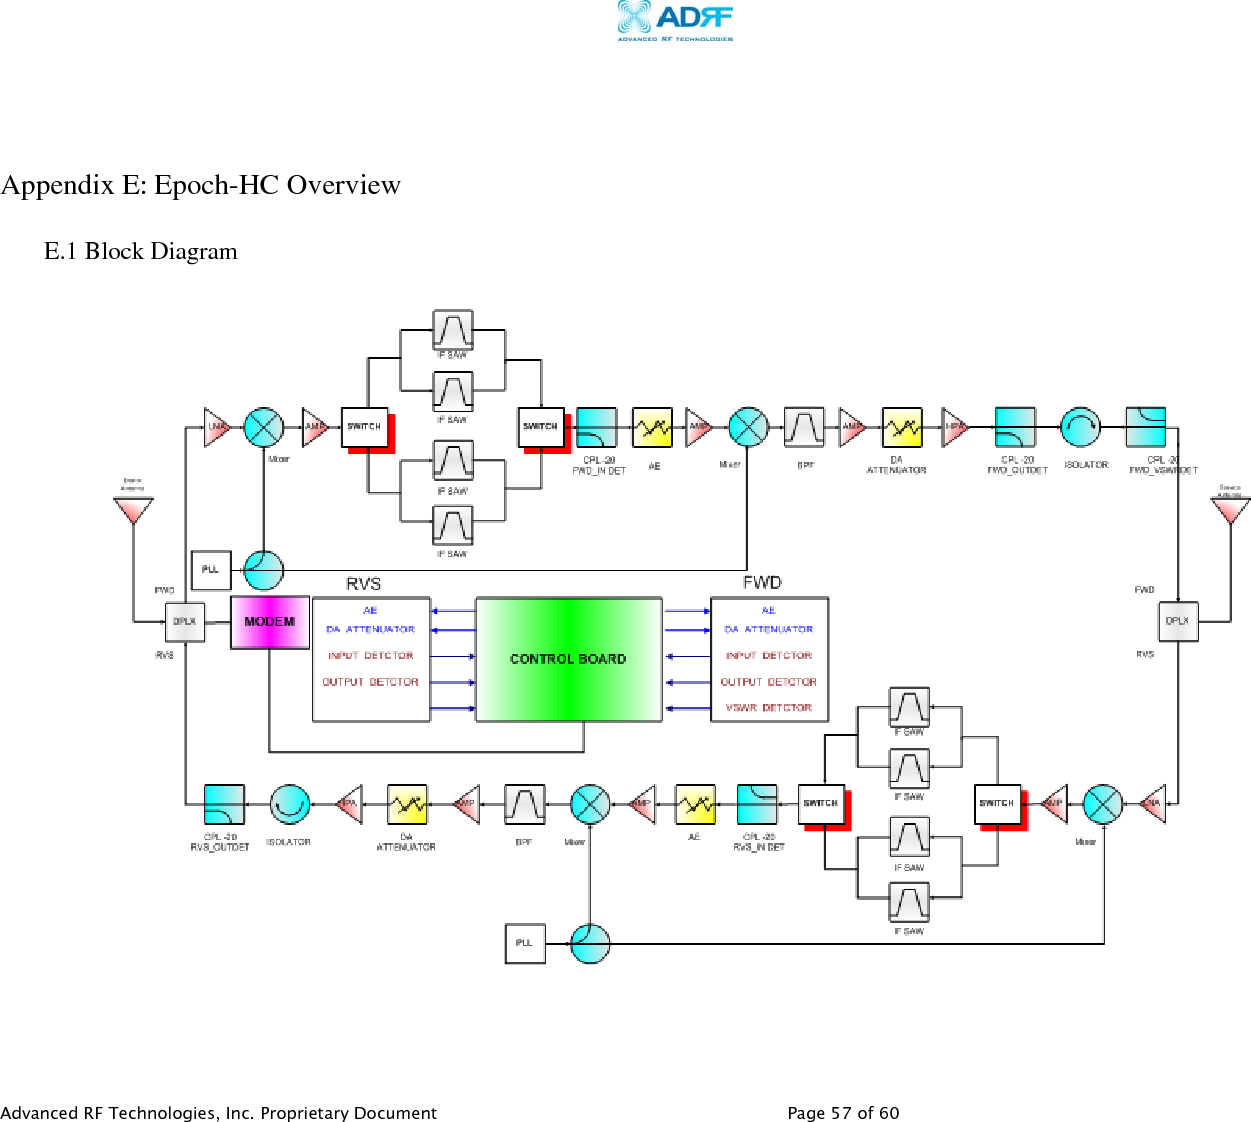     Advanced RF Technologies, Inc. Proprietary Document   Page 57 of 60   Appendix E: Epoch-HC Overview  E.1 Block Diagram  